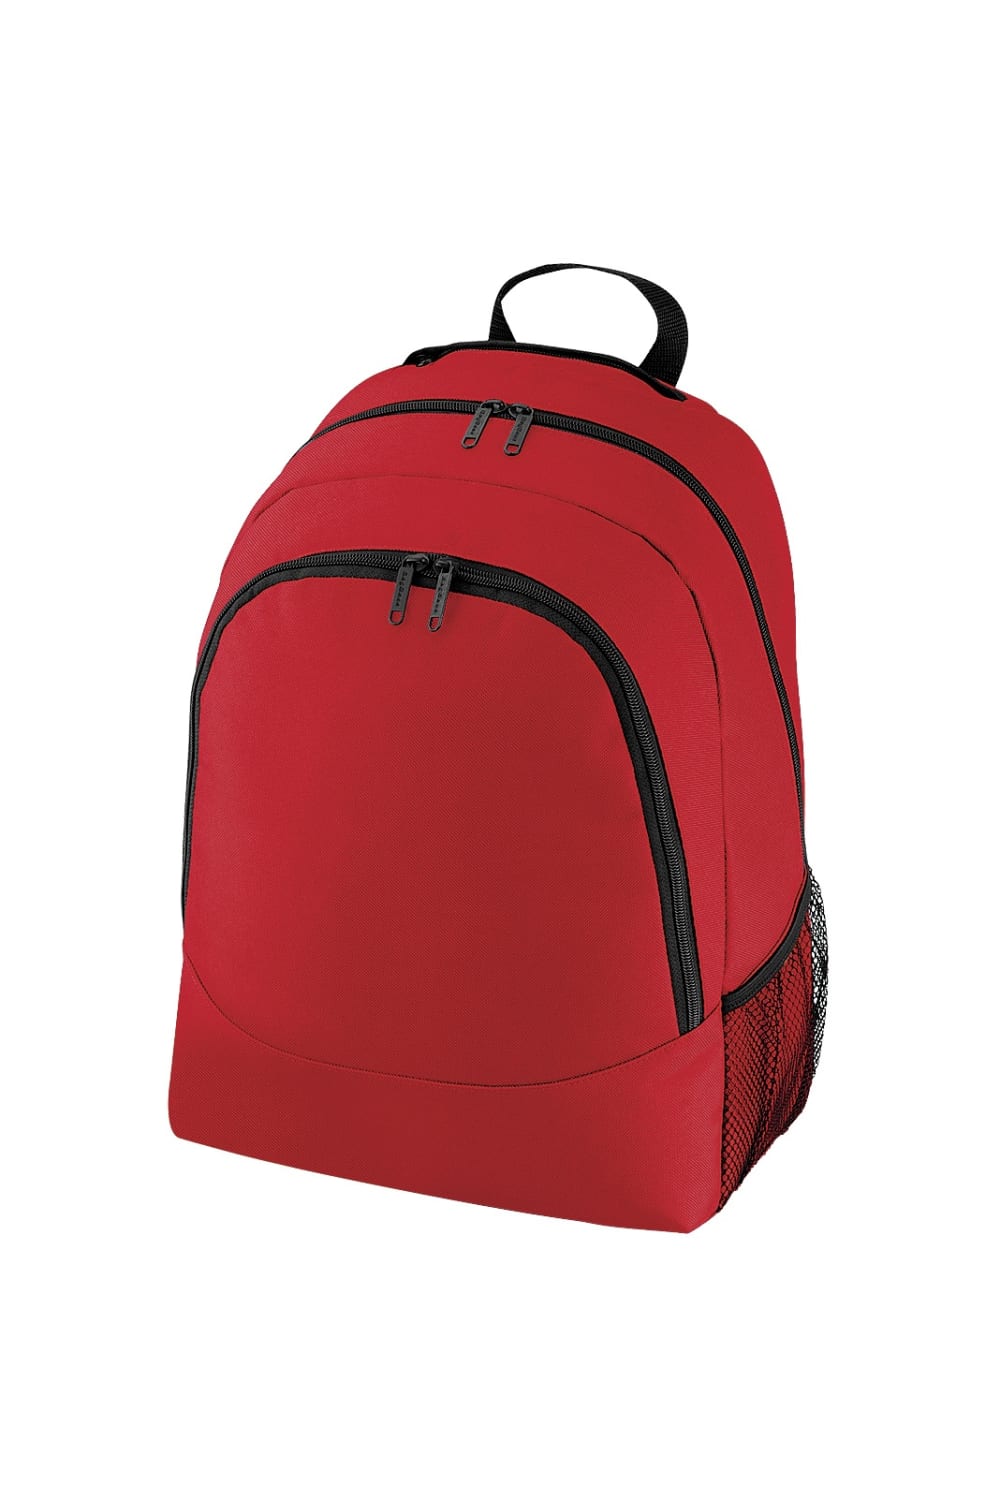 Universal Multipurpose Backpack/Rucksack/Bag, 18 Litres - Classic Red